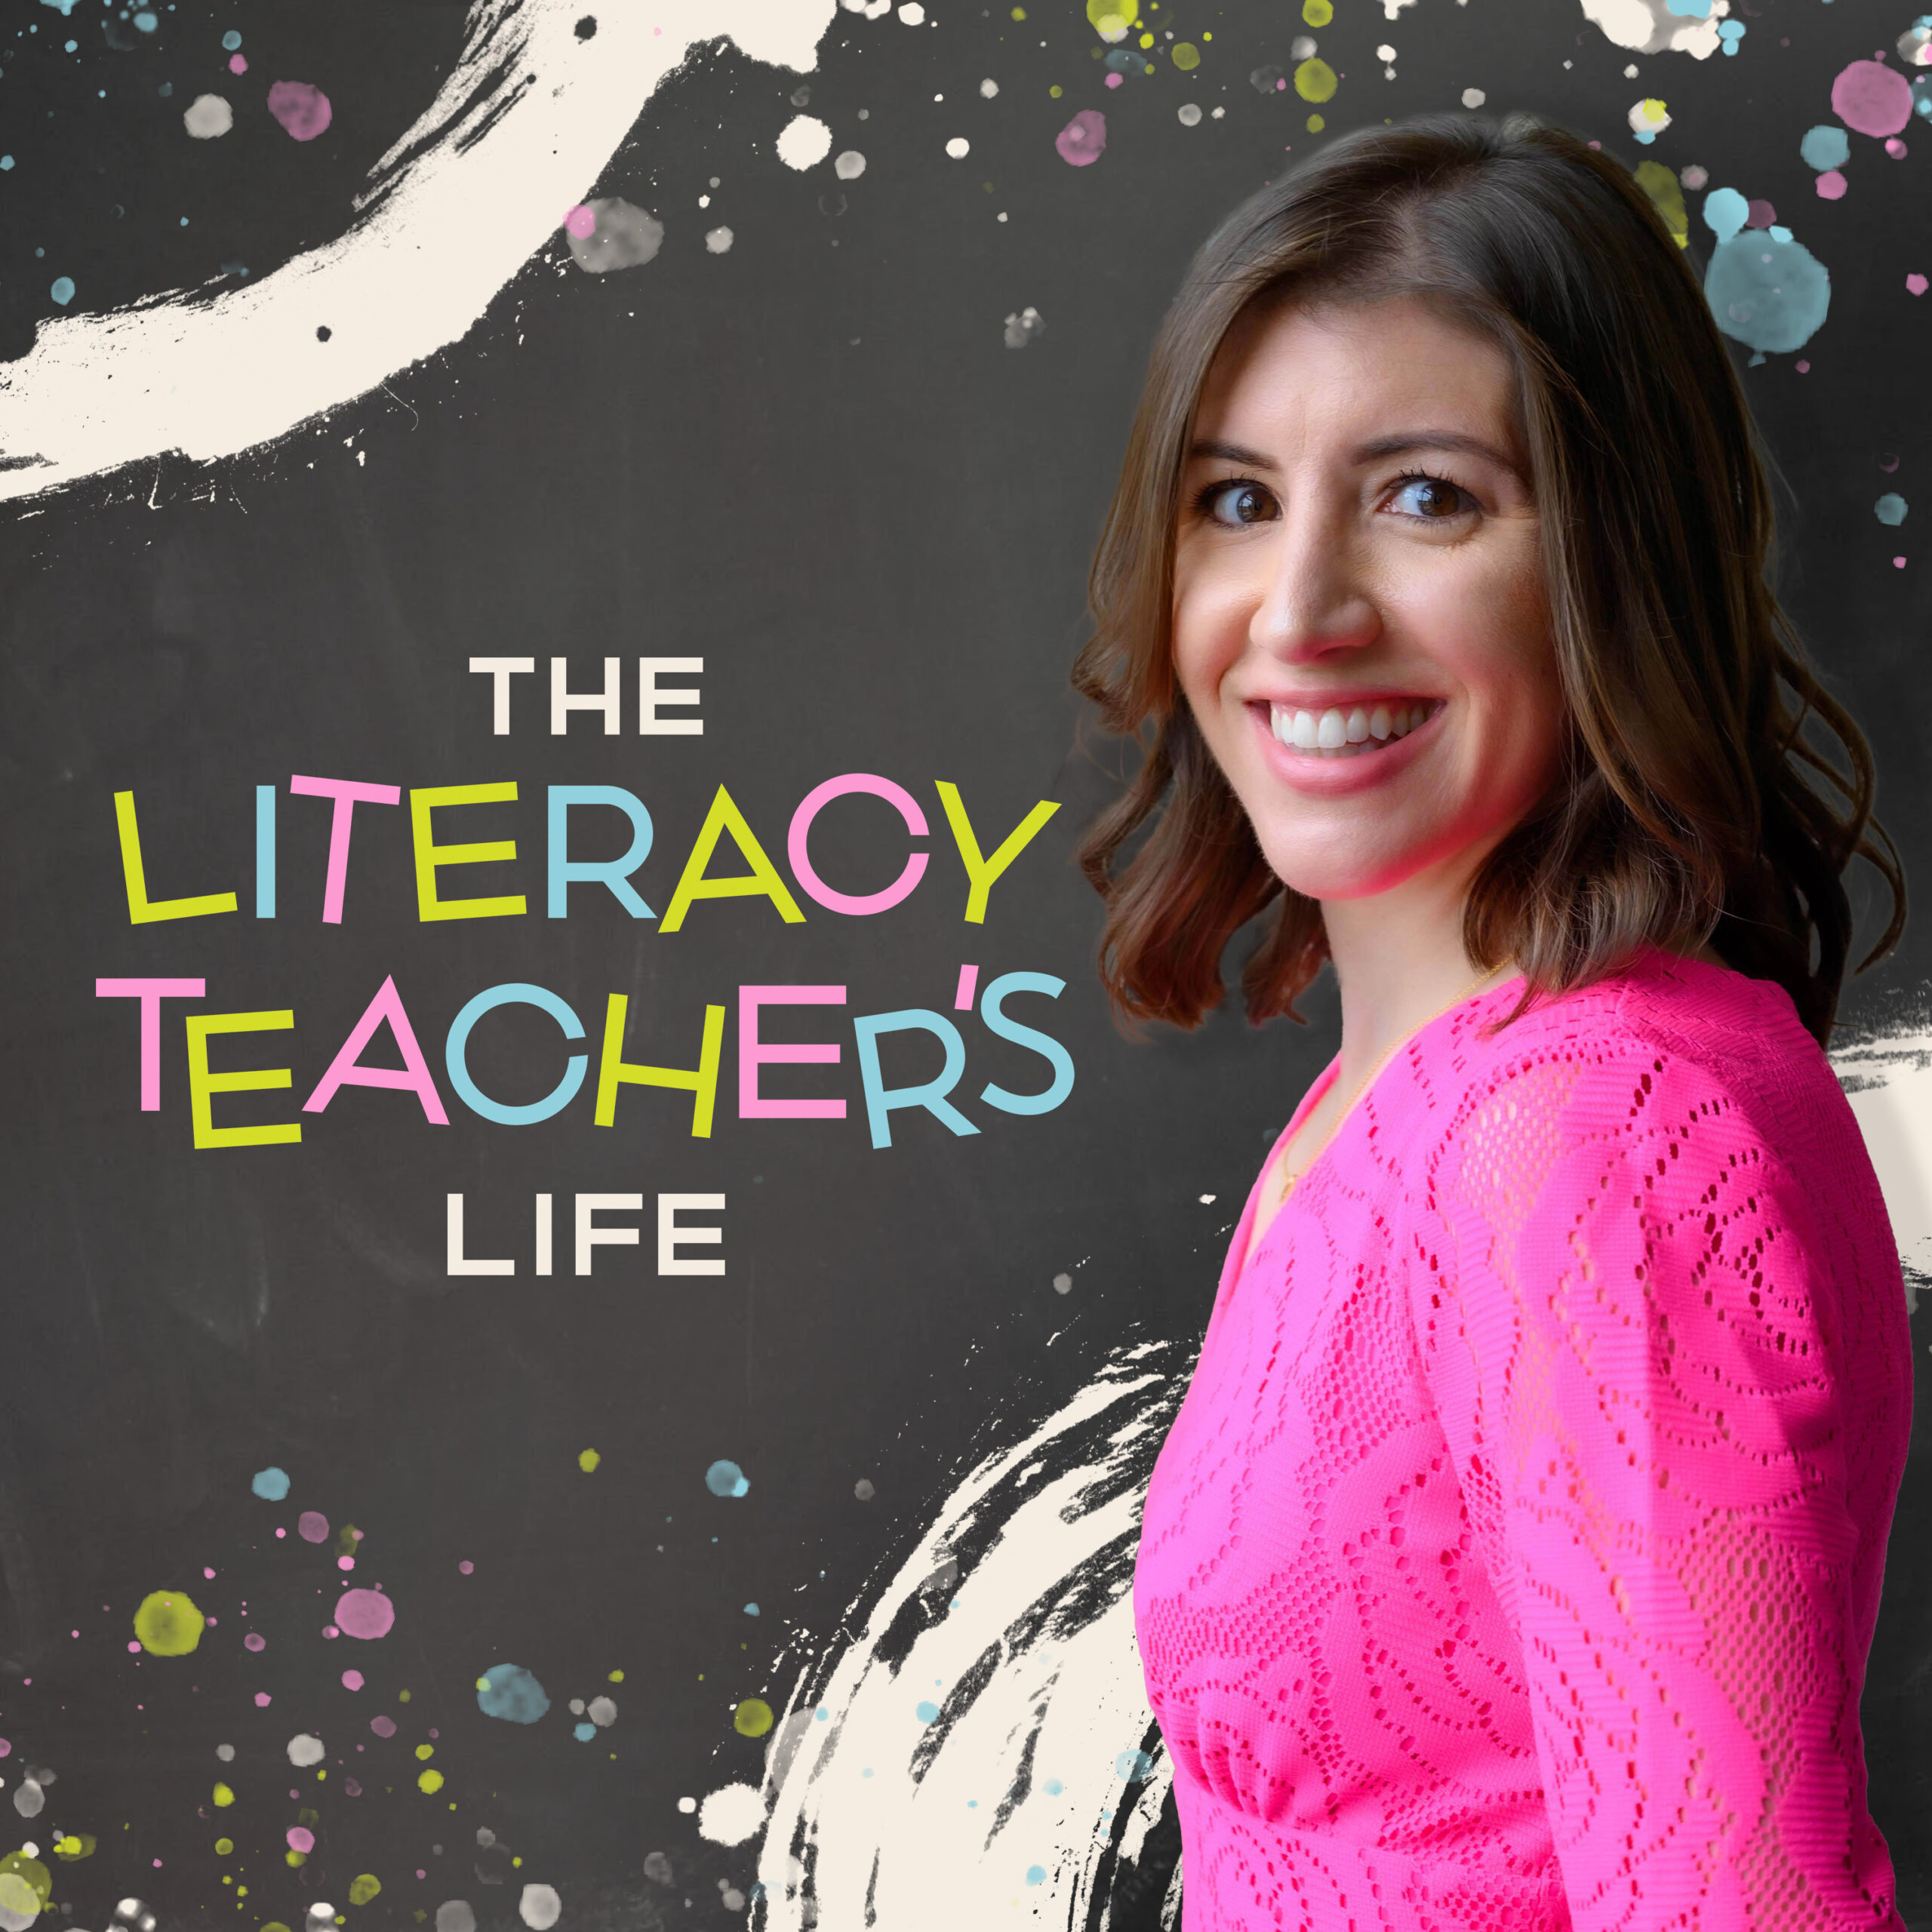 The Literacy Teacher’s Life with Elizabeth Morphis